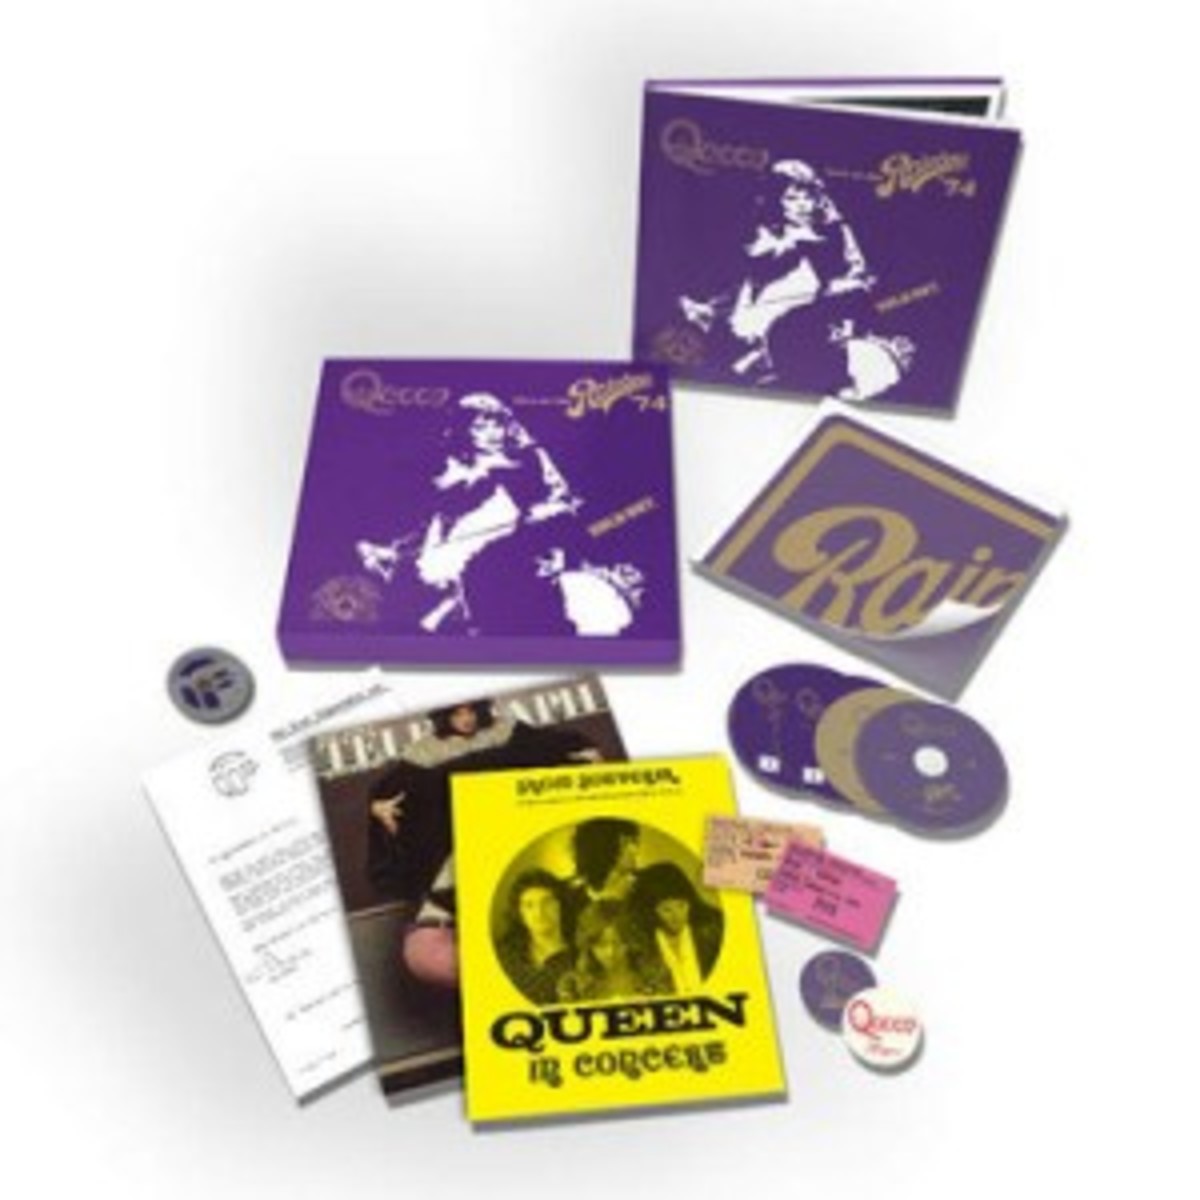 Queen-Queen-Live-At-The-Rainbow-74-Super-Deluxe-Box-Set